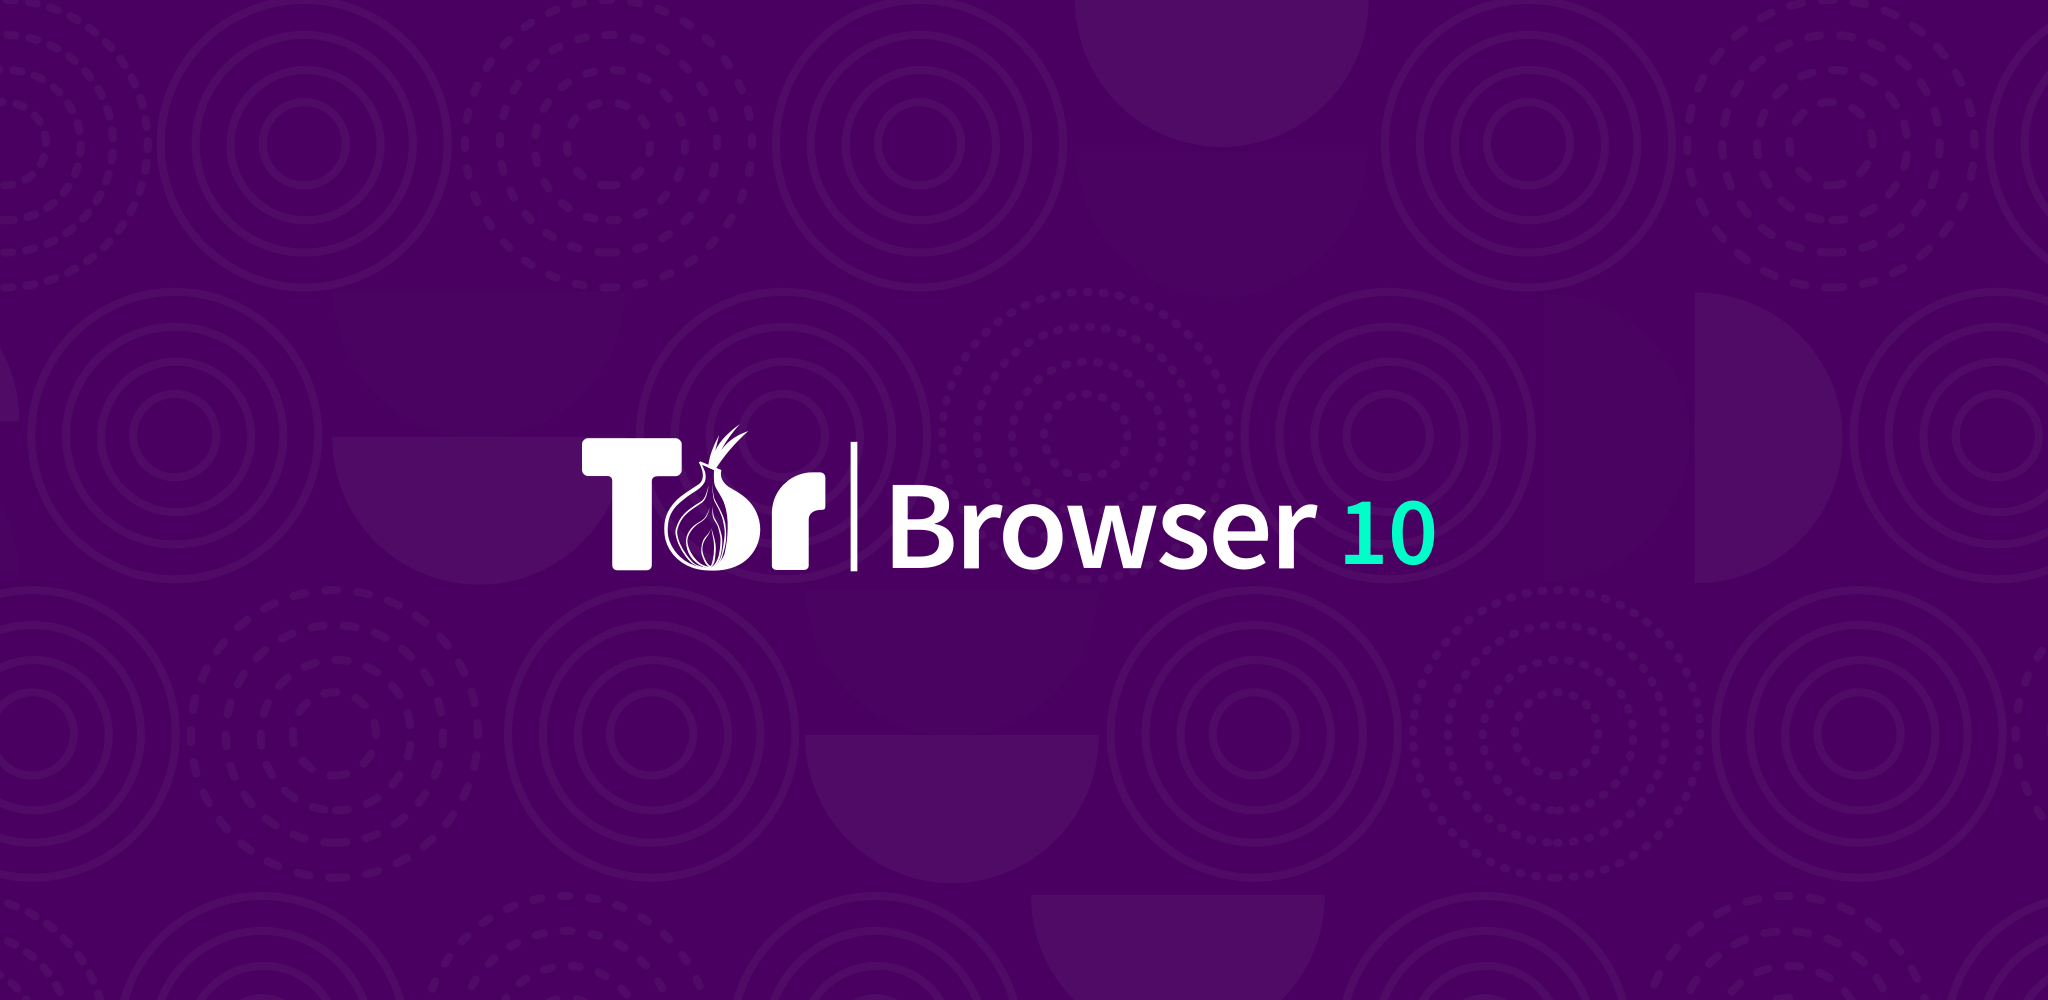 Tor browser плагин скачать mega2web даркнет сериал hdrezka mega